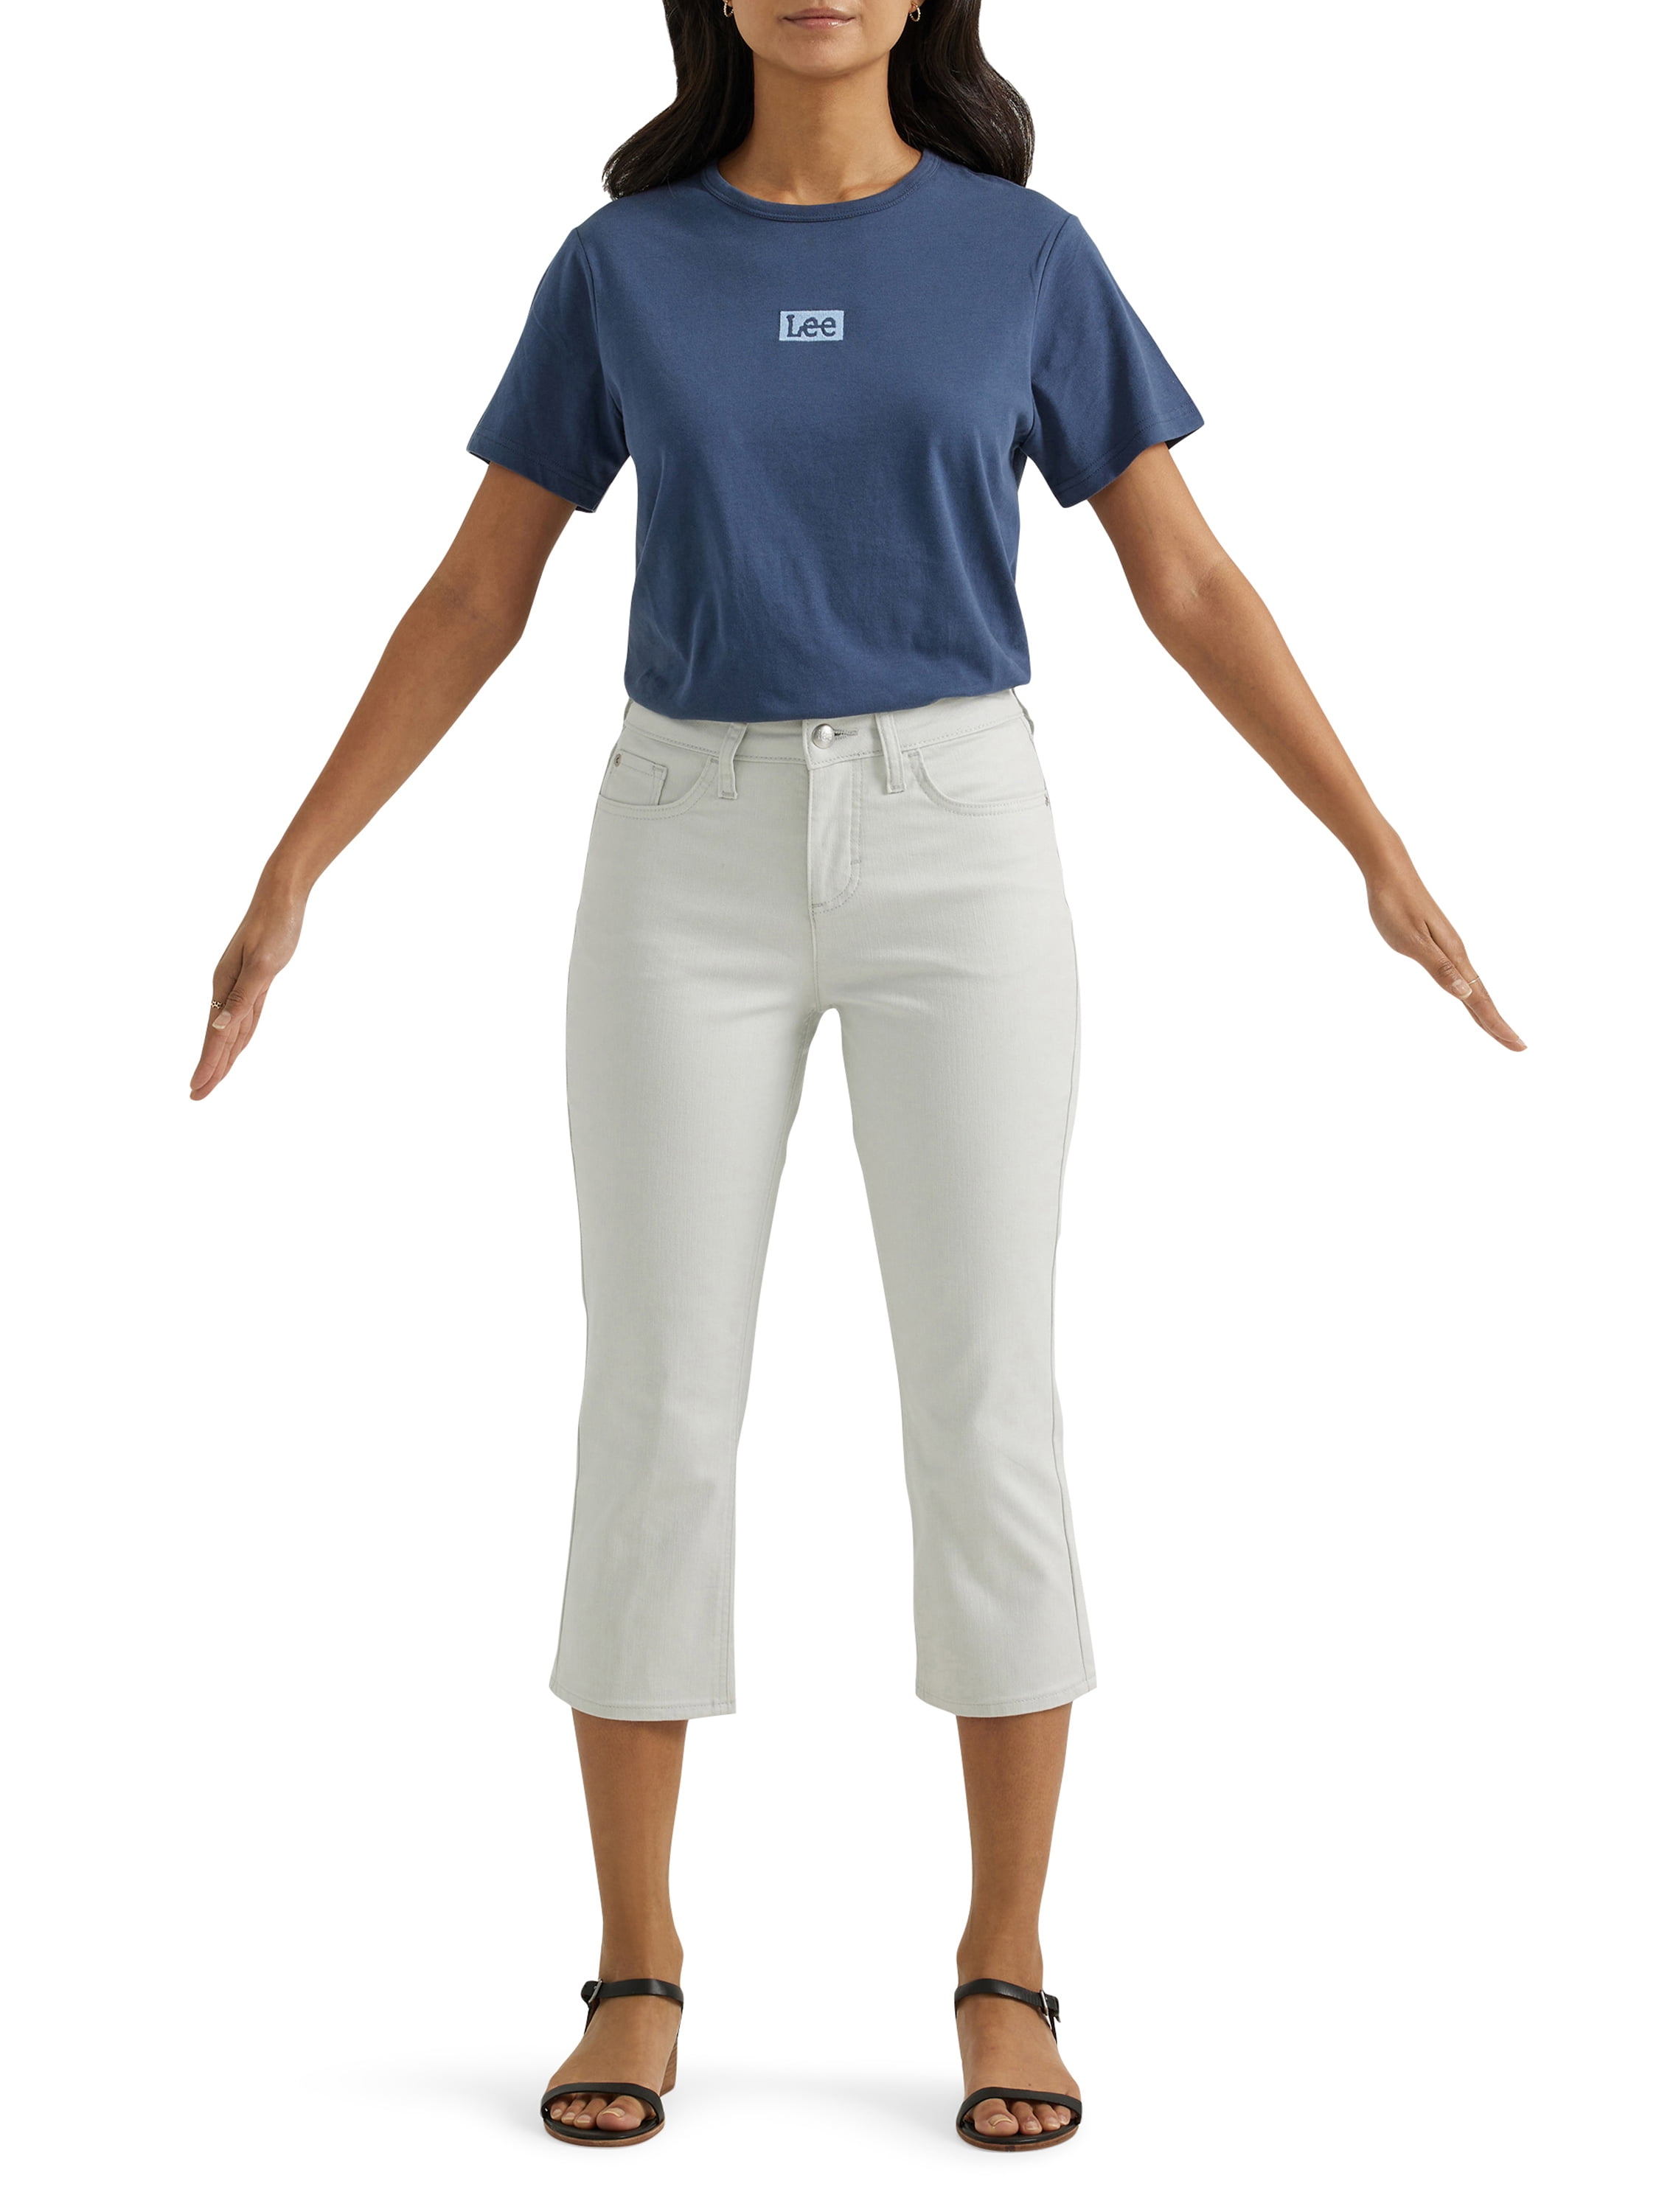 Lee Style Up Capri Pants Size 16 Medium — Family Tree Resale 1